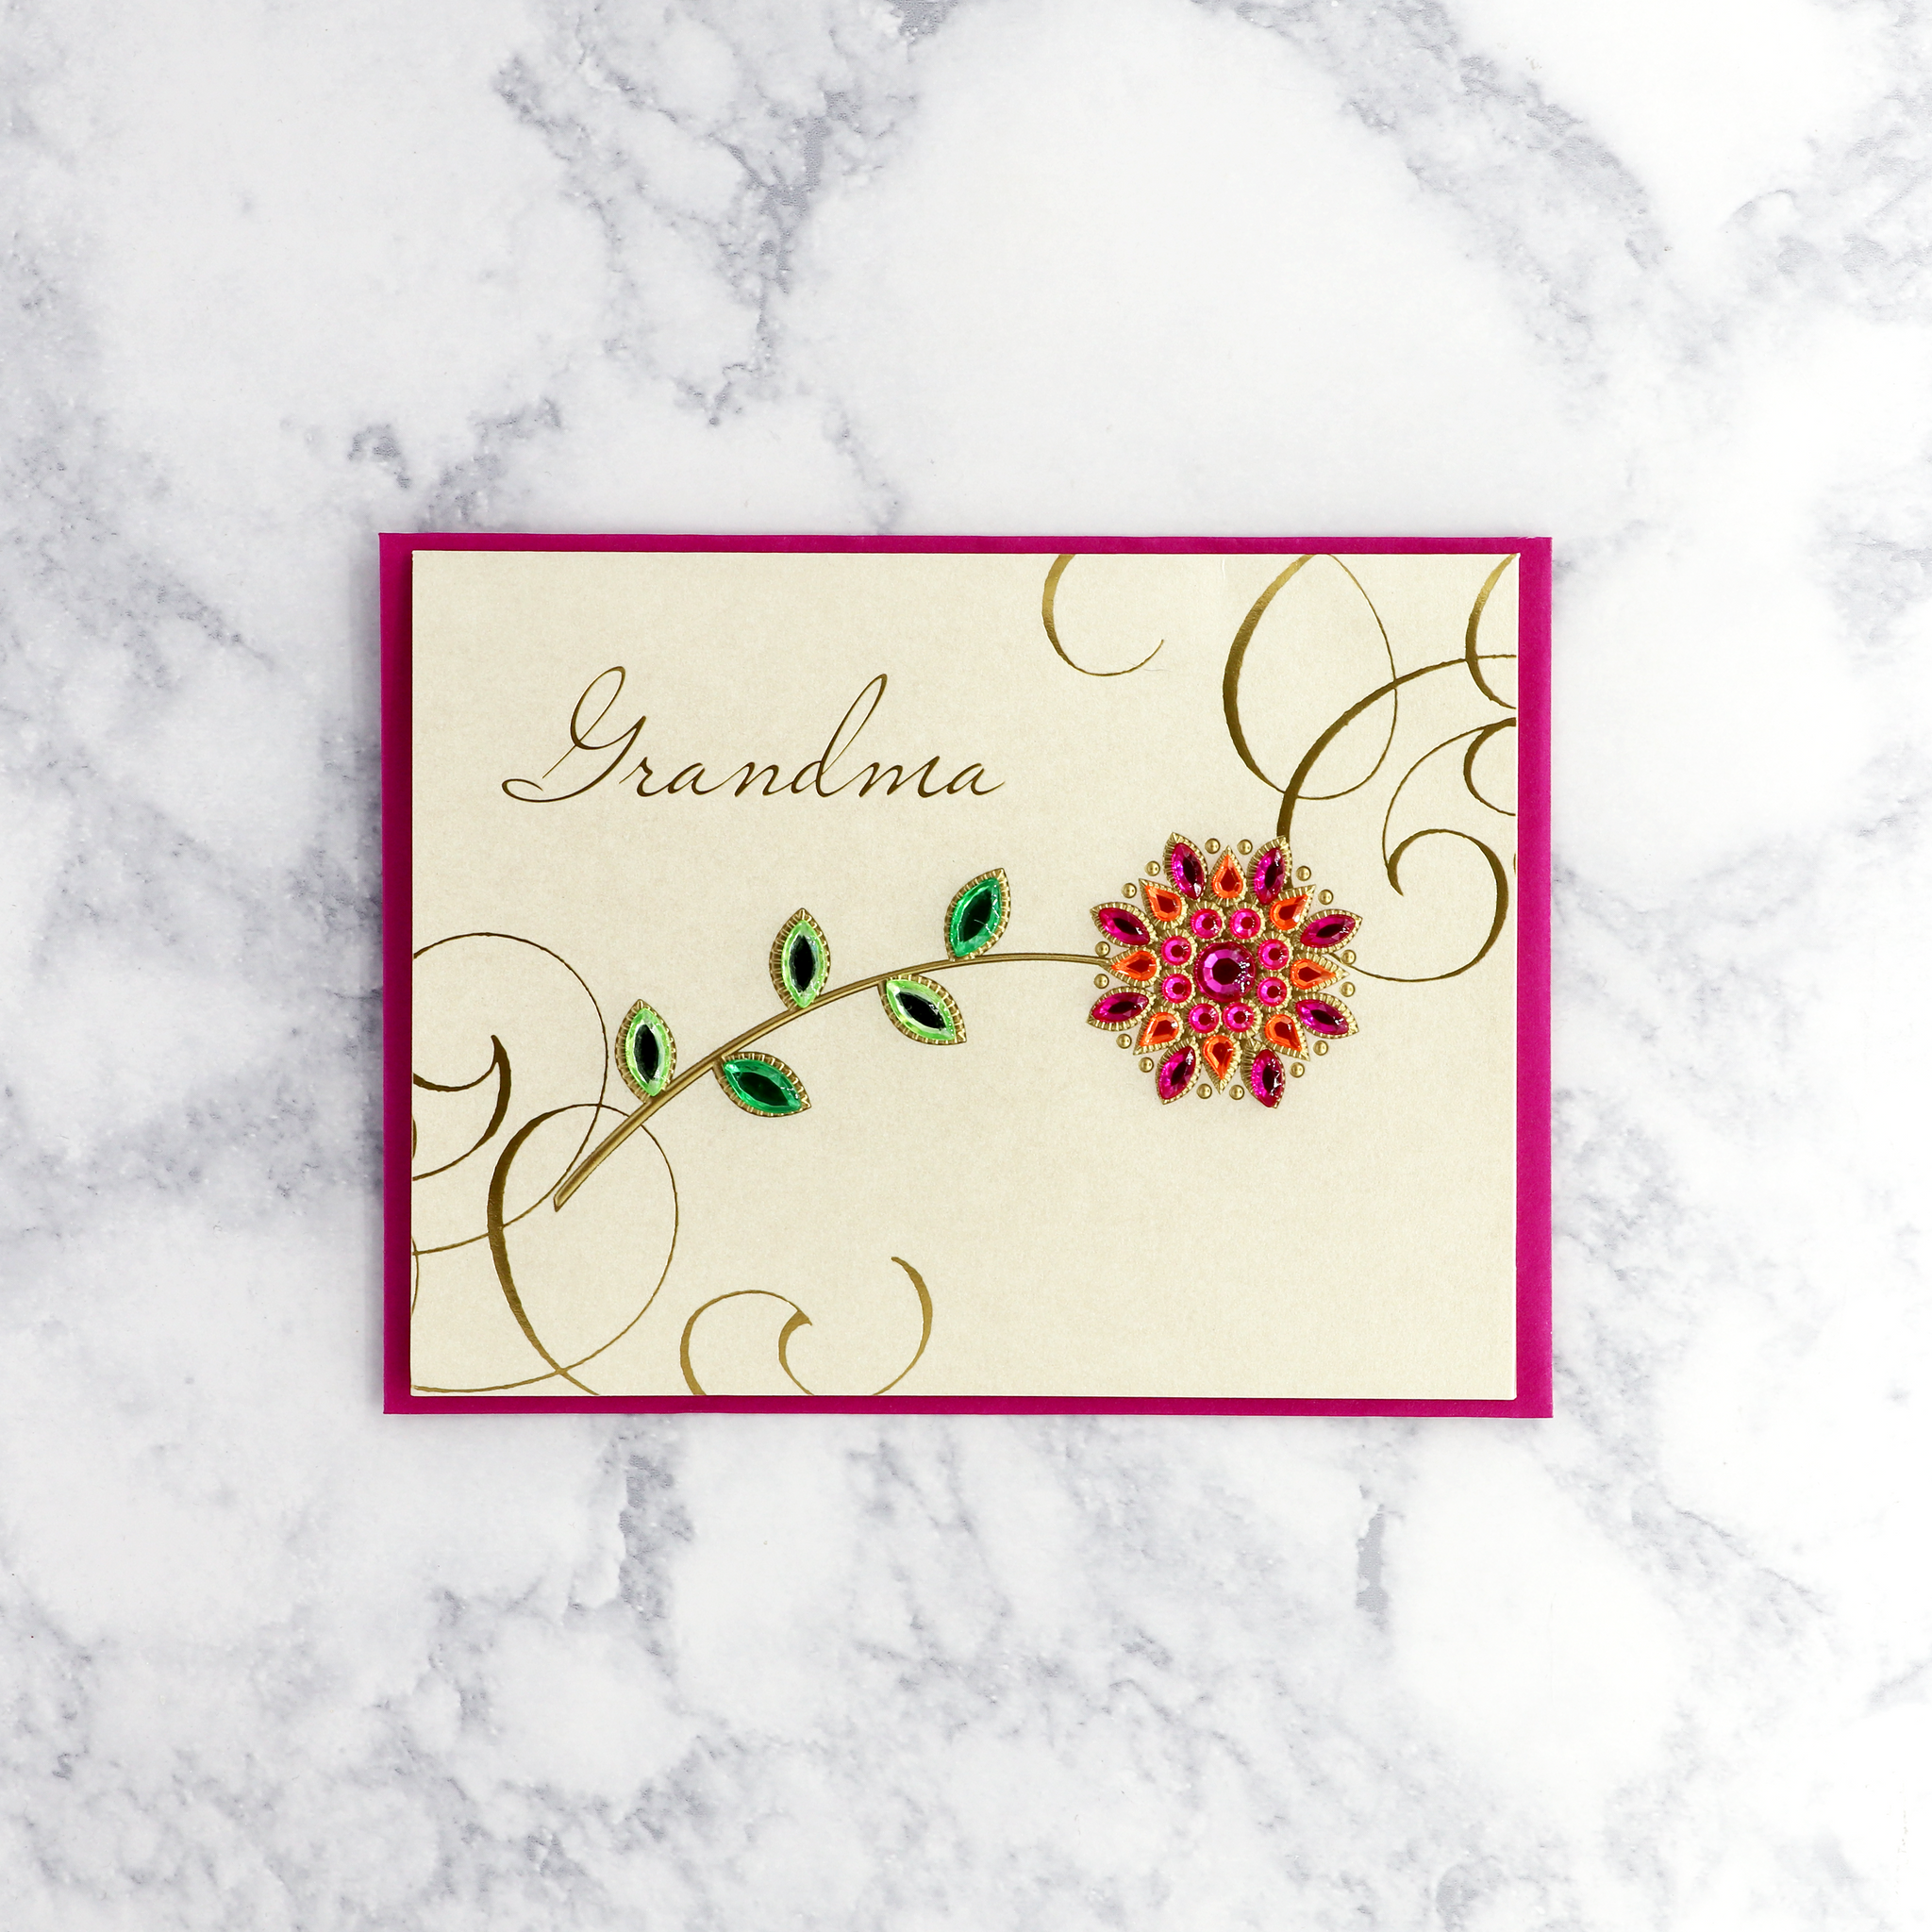 Gem Flowers On Foil Swirls Mother's Day Card (Grandma)